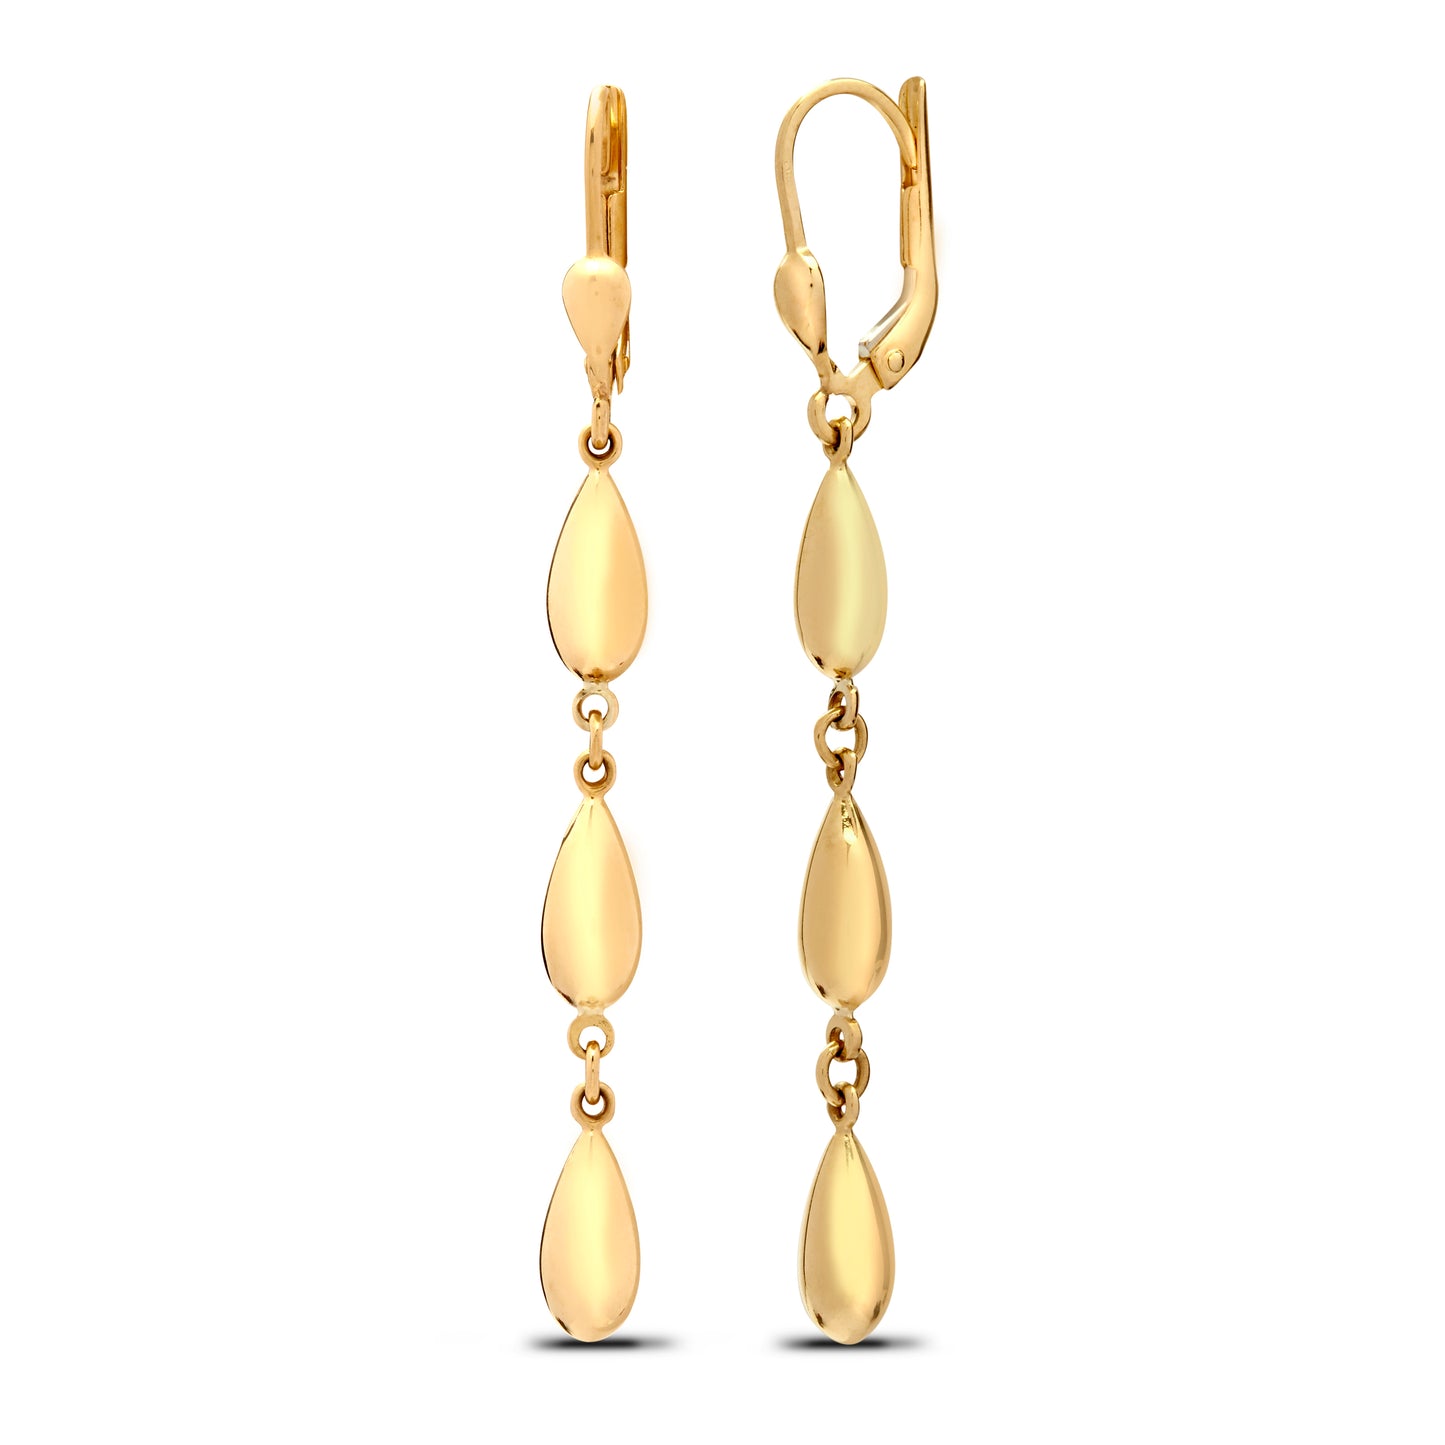 Ladies 9ct Gold  Raindrop Trilogy Drop Earrings - JER781